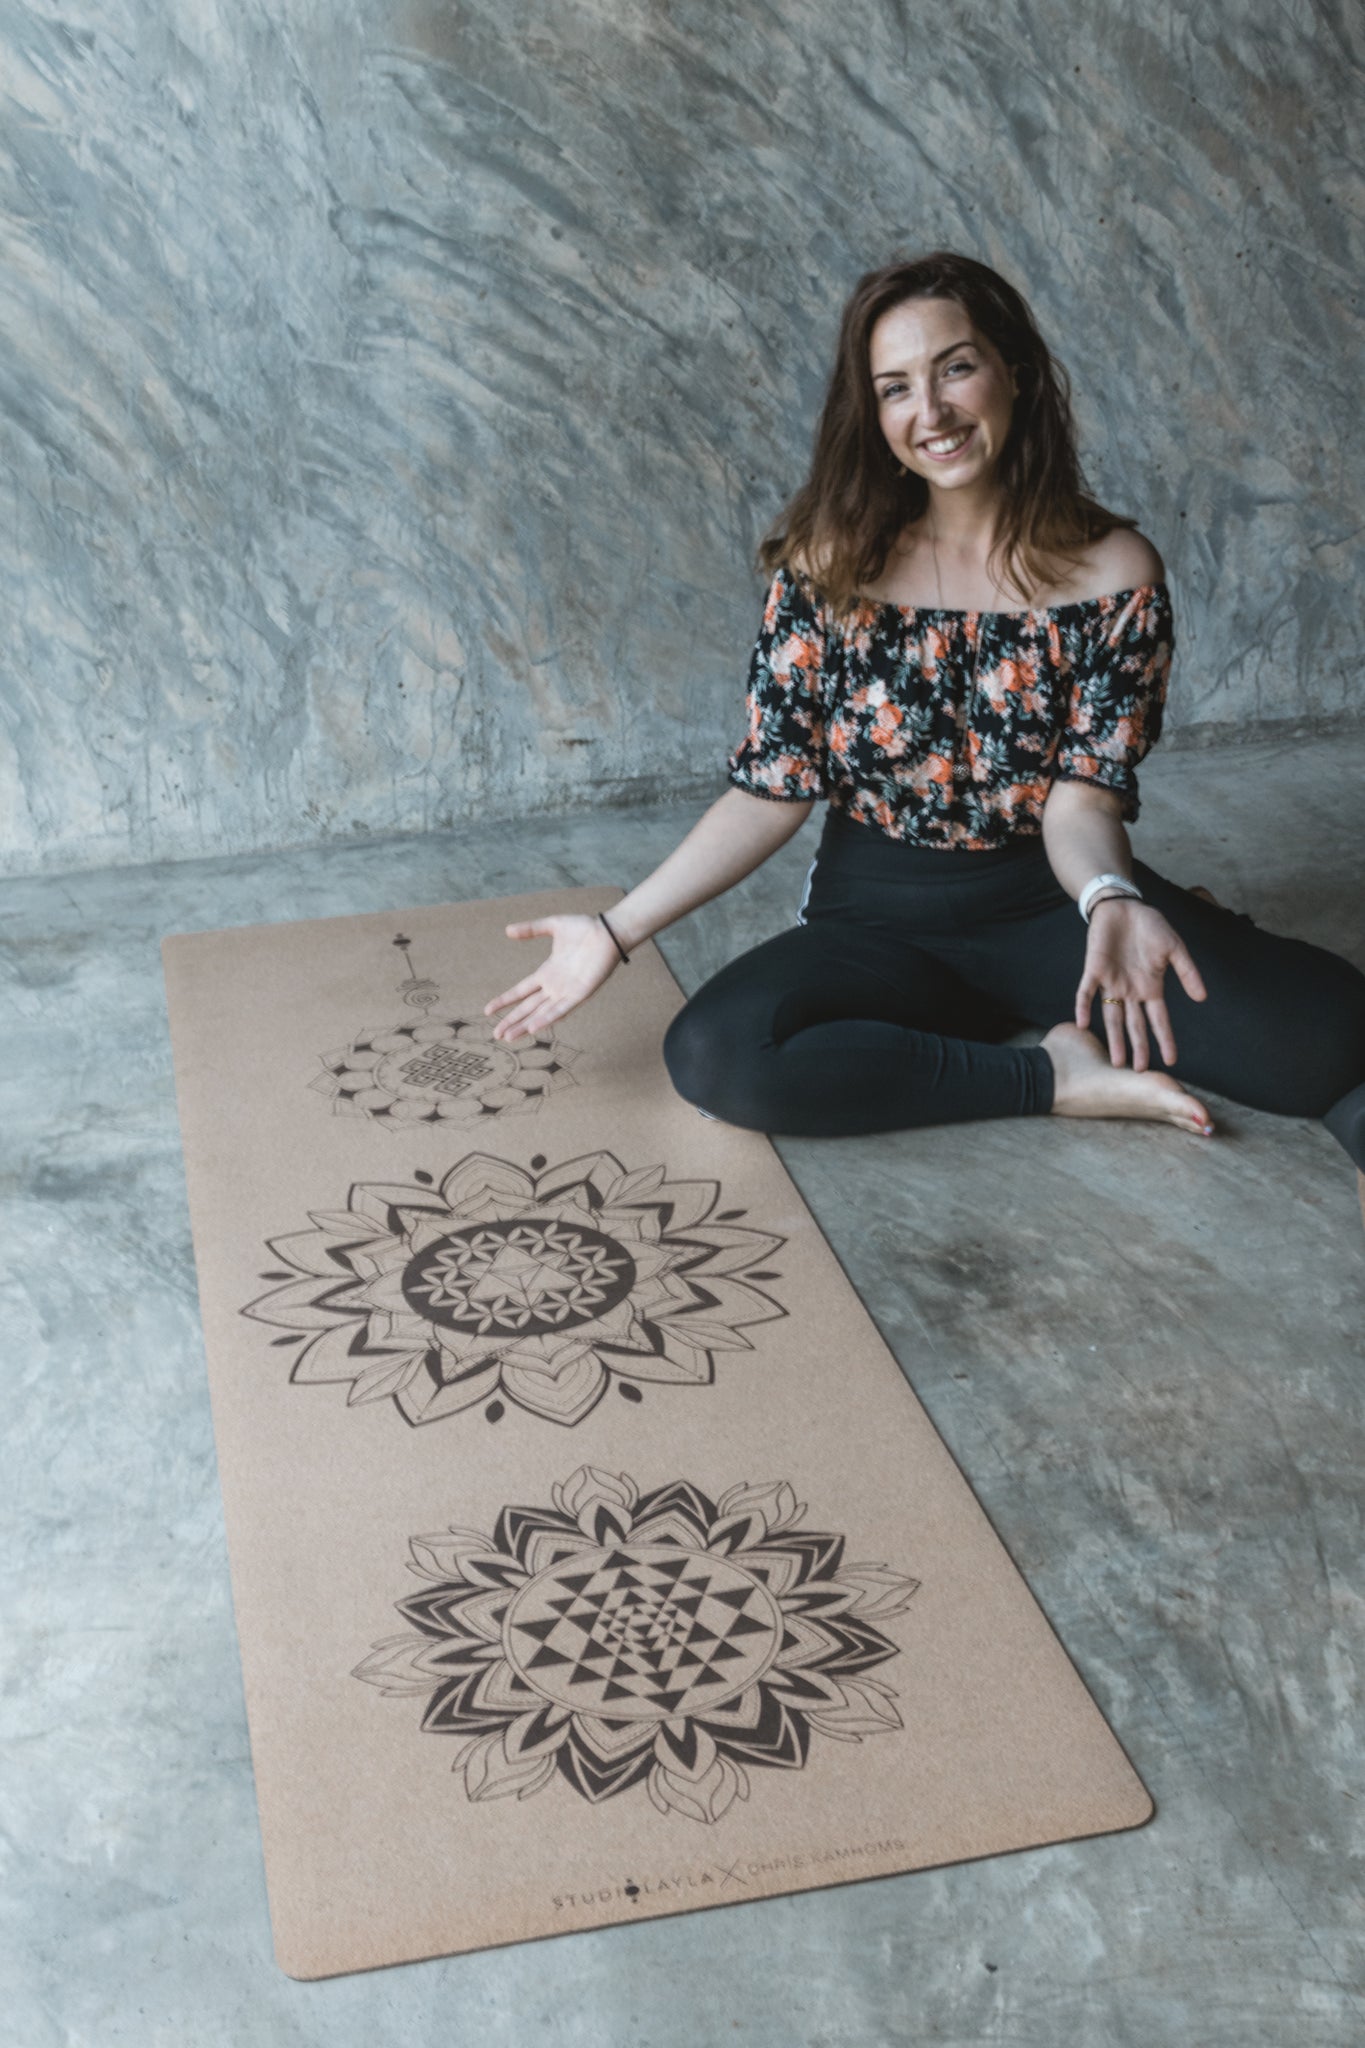 Journey, Eco-Friendly Cork Yoga Mat